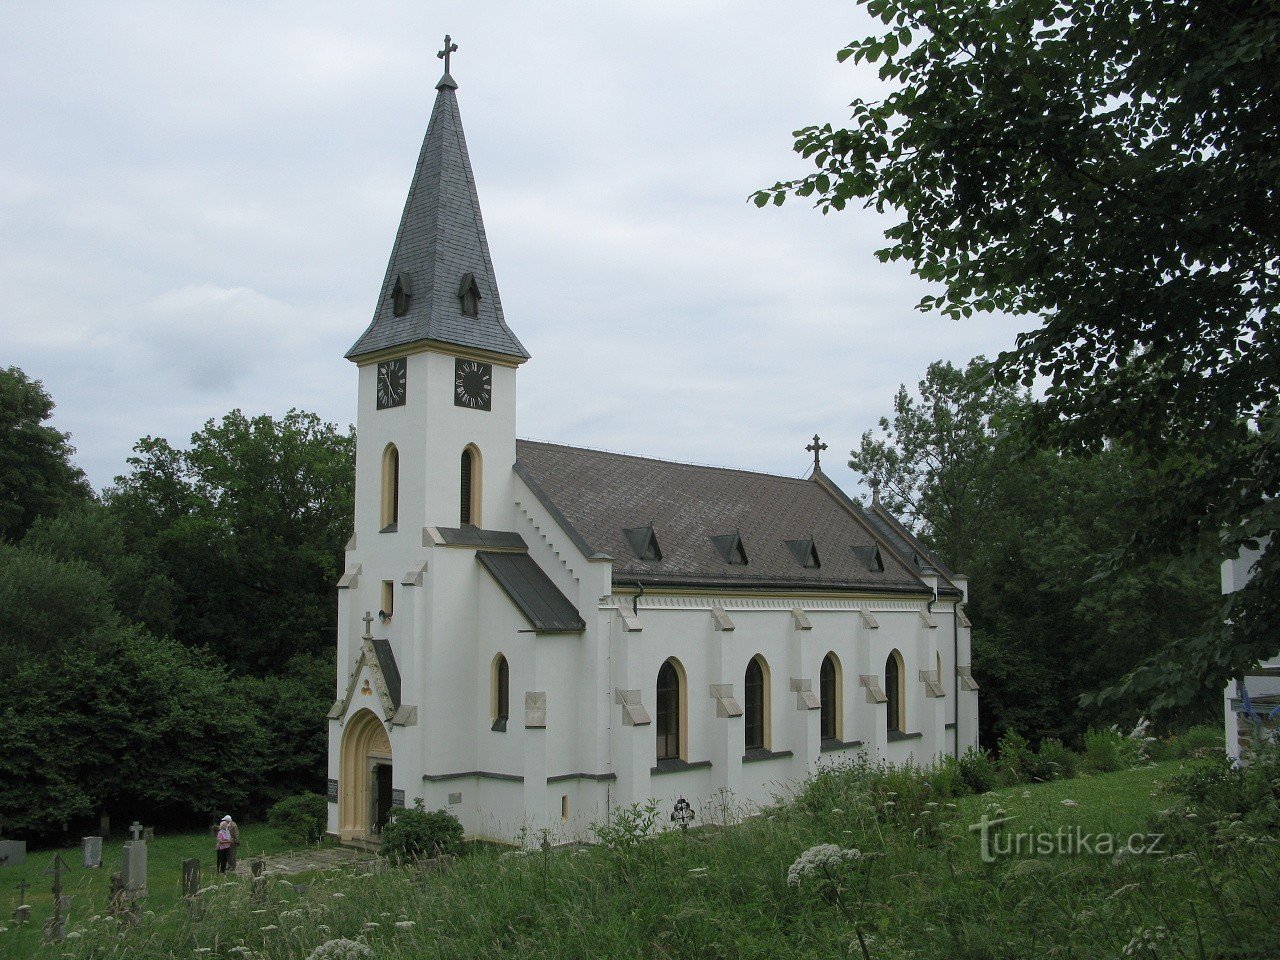 Kirken, et tavst vidne midt på kirkegården